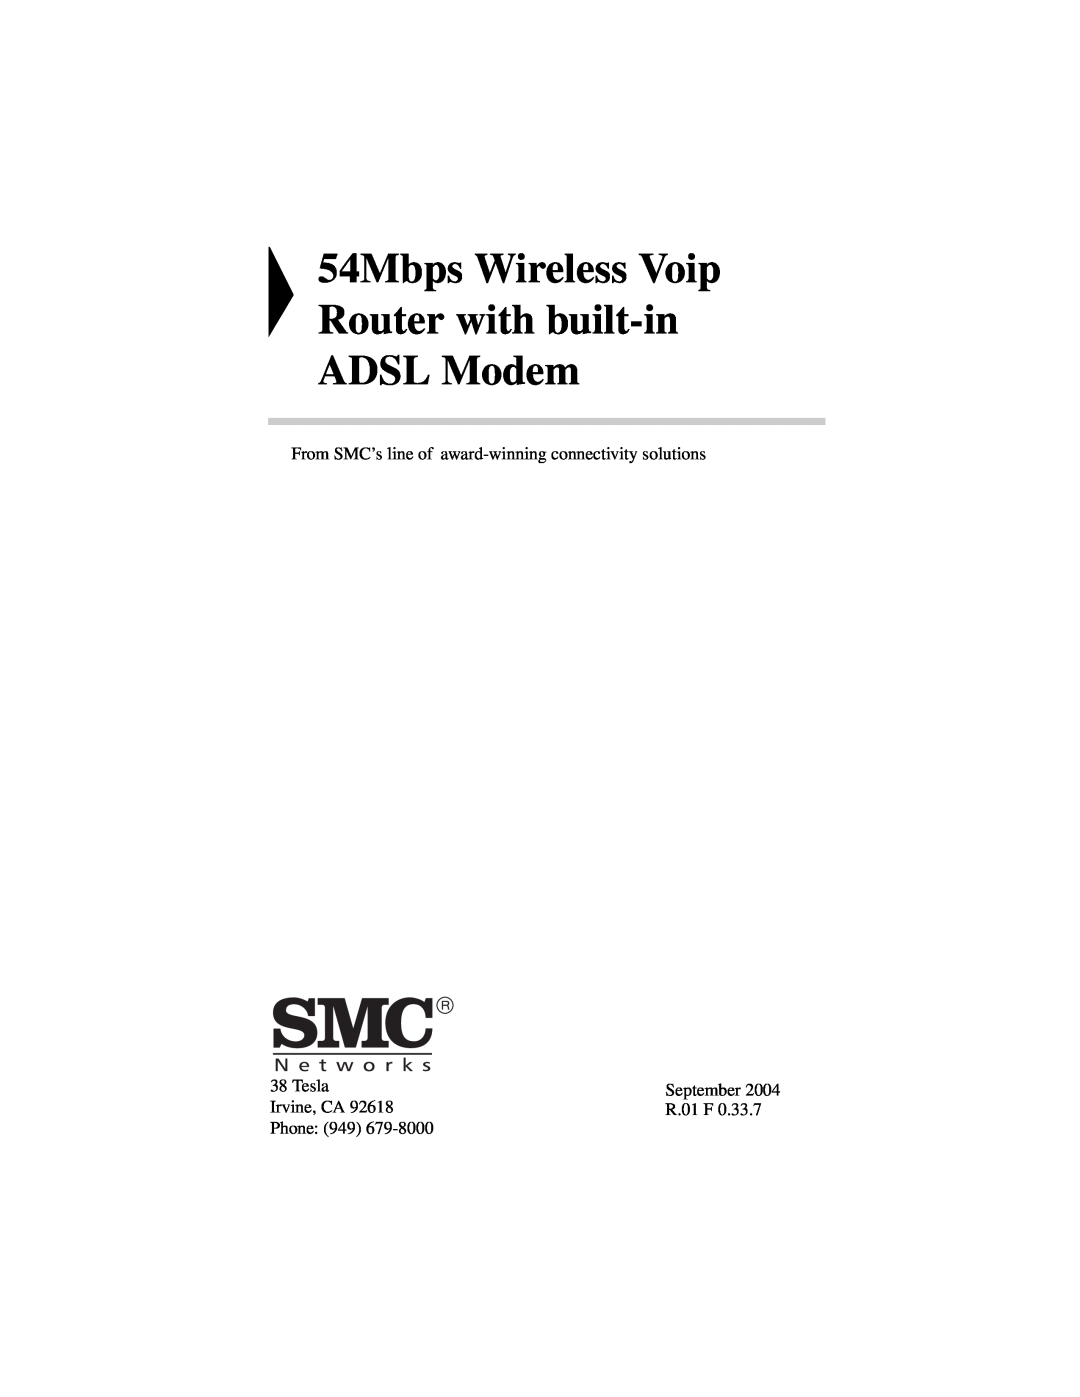 SMC Networks SMC7908VoWBRA 54Mbps Wireless Voip Router with built-in ADSL Modem, Tesla, September, Irvine, CA, R.01 F 